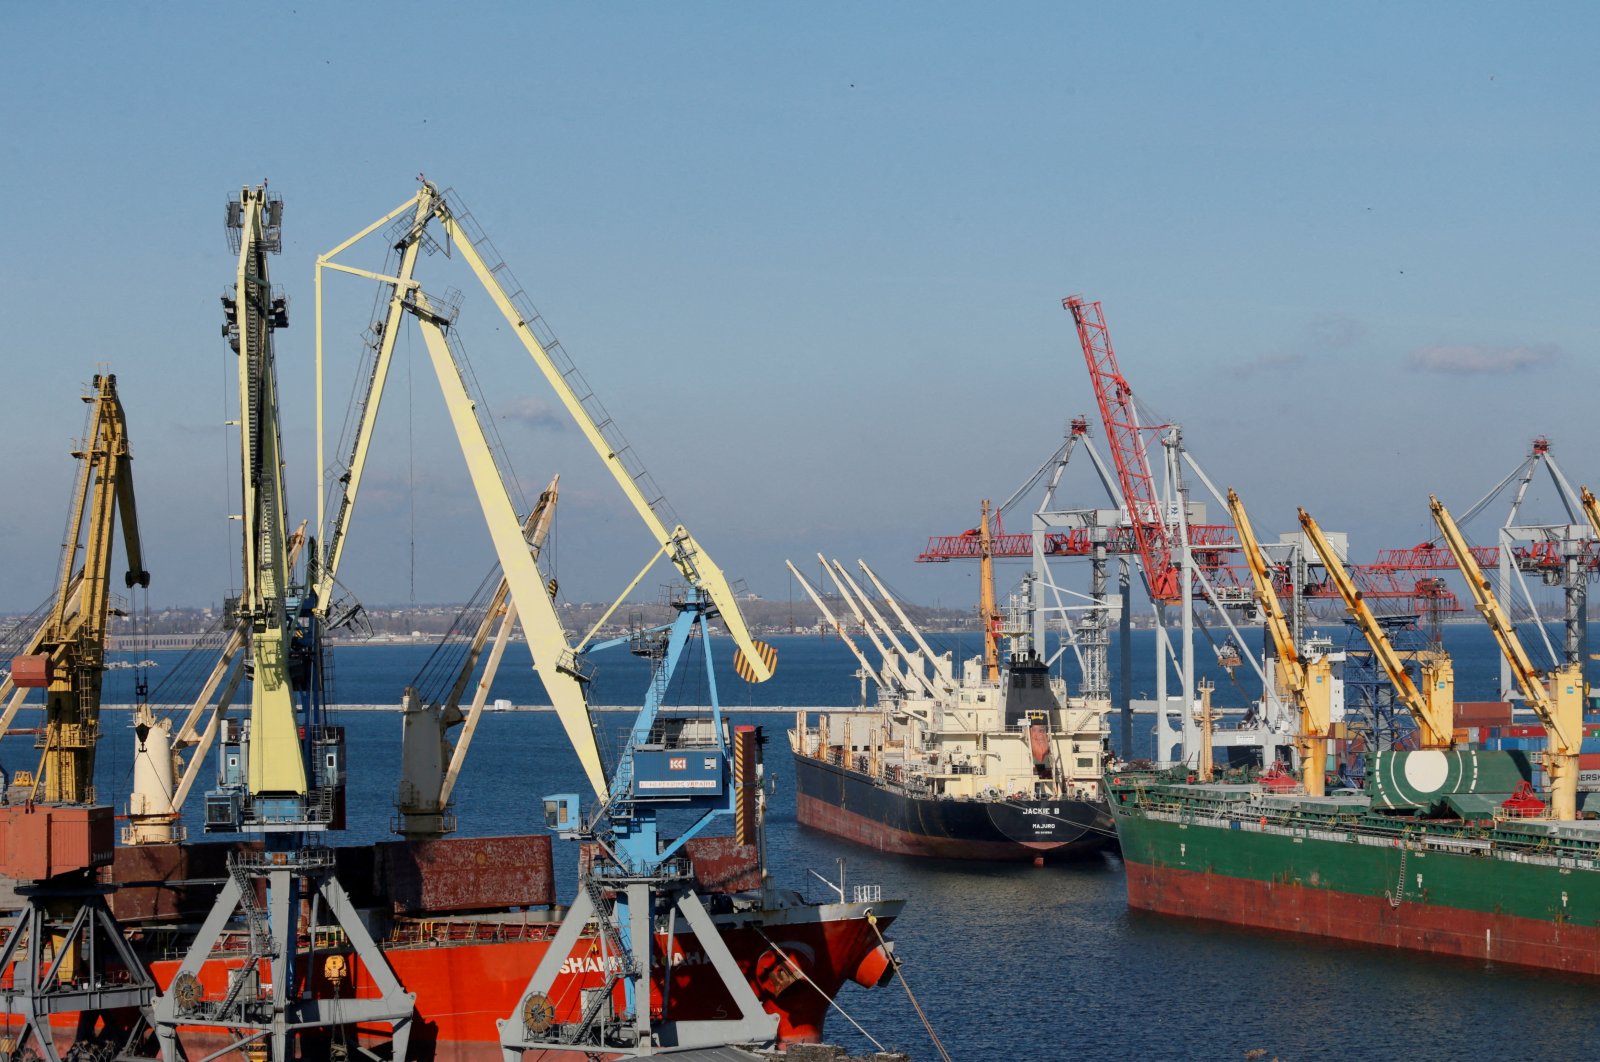 Cargo ships are docked in the Black Sea port of Odessa, Ukraine, Nov. 4, 2016. (Reuters Photo)